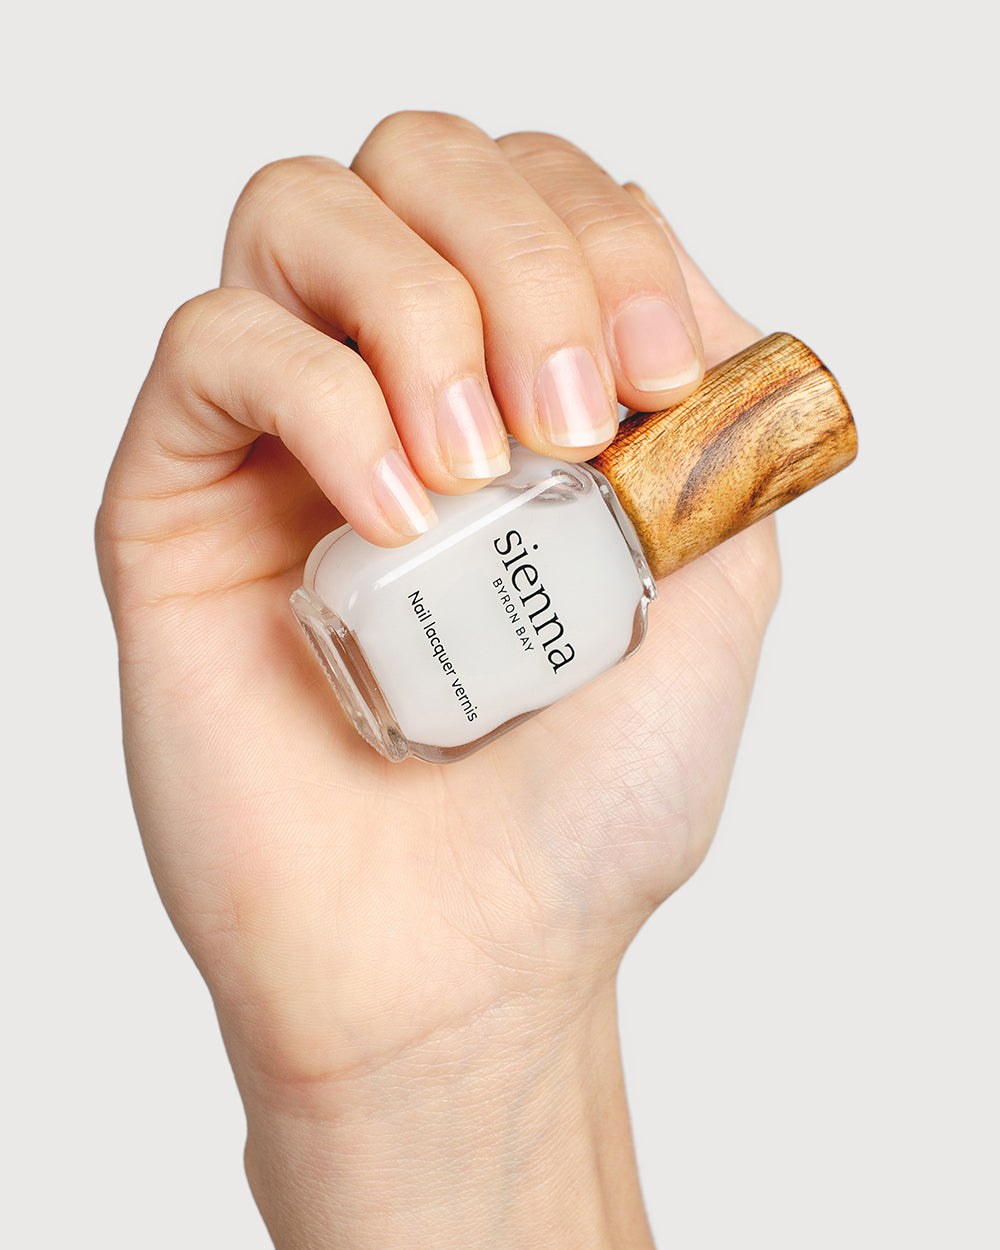 nail strengthener hand swatch on fair skin tone holding sienna bottle